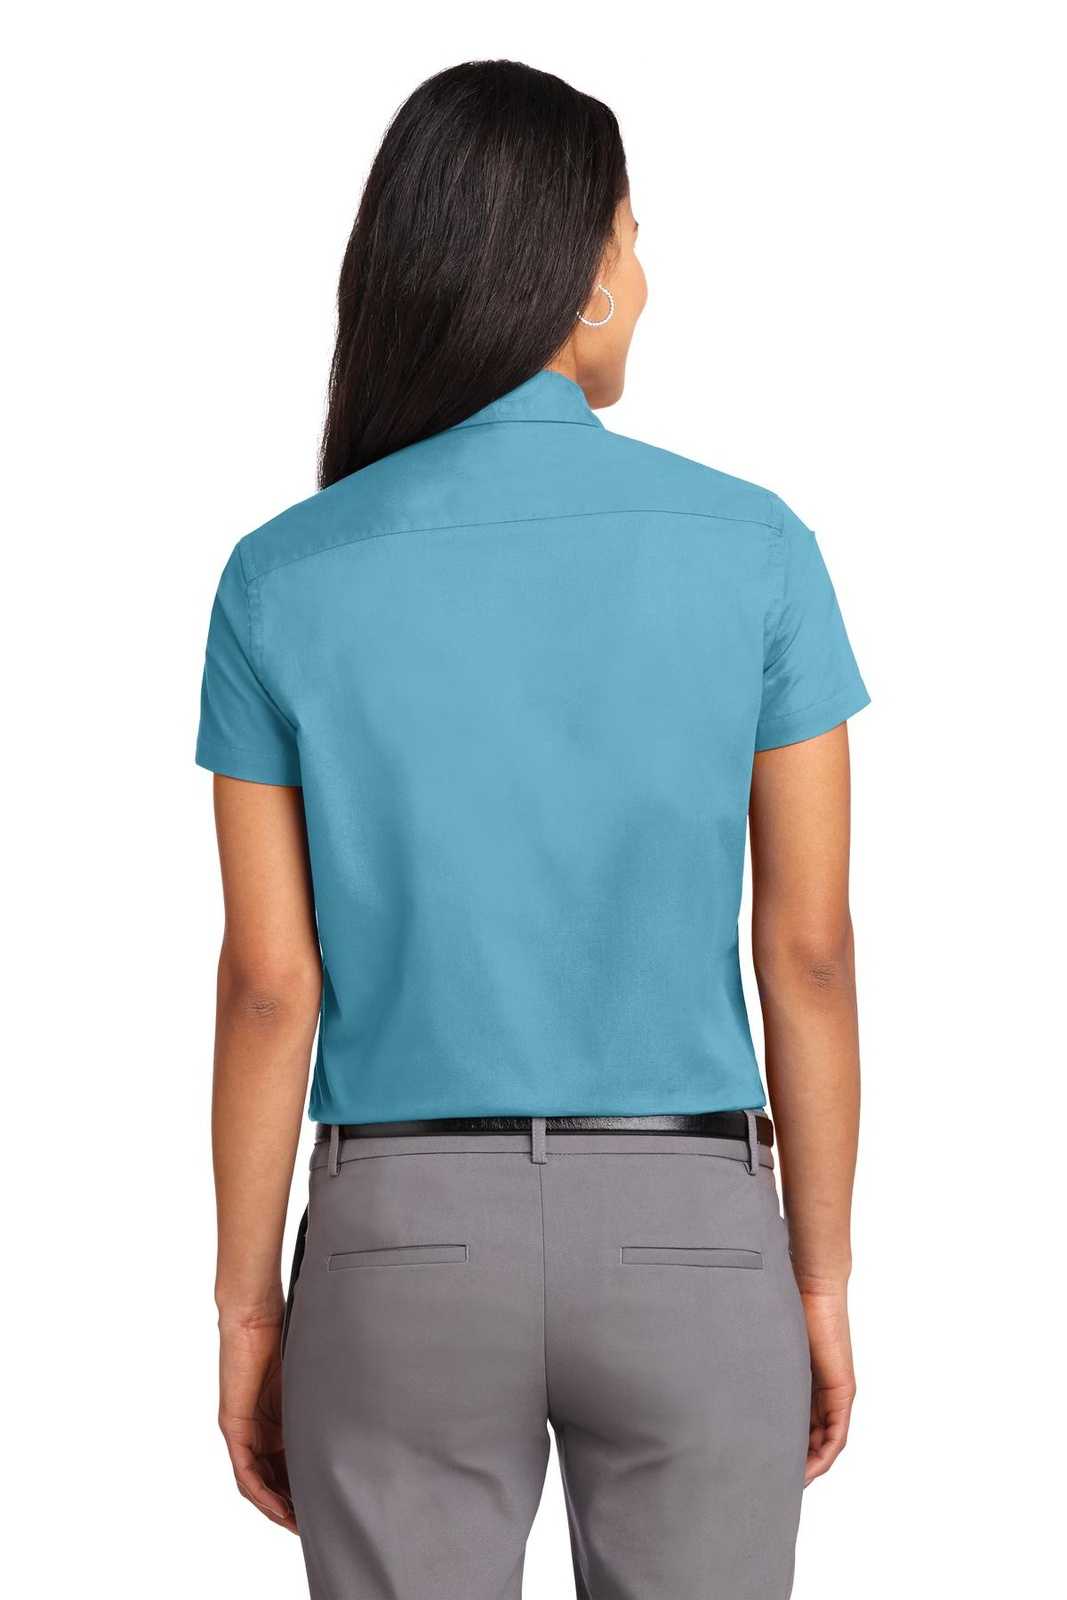 Port Authority L508 Ladies Short Sleeve Easy Care Shirt - Maui Blue - HIT a Double - 1